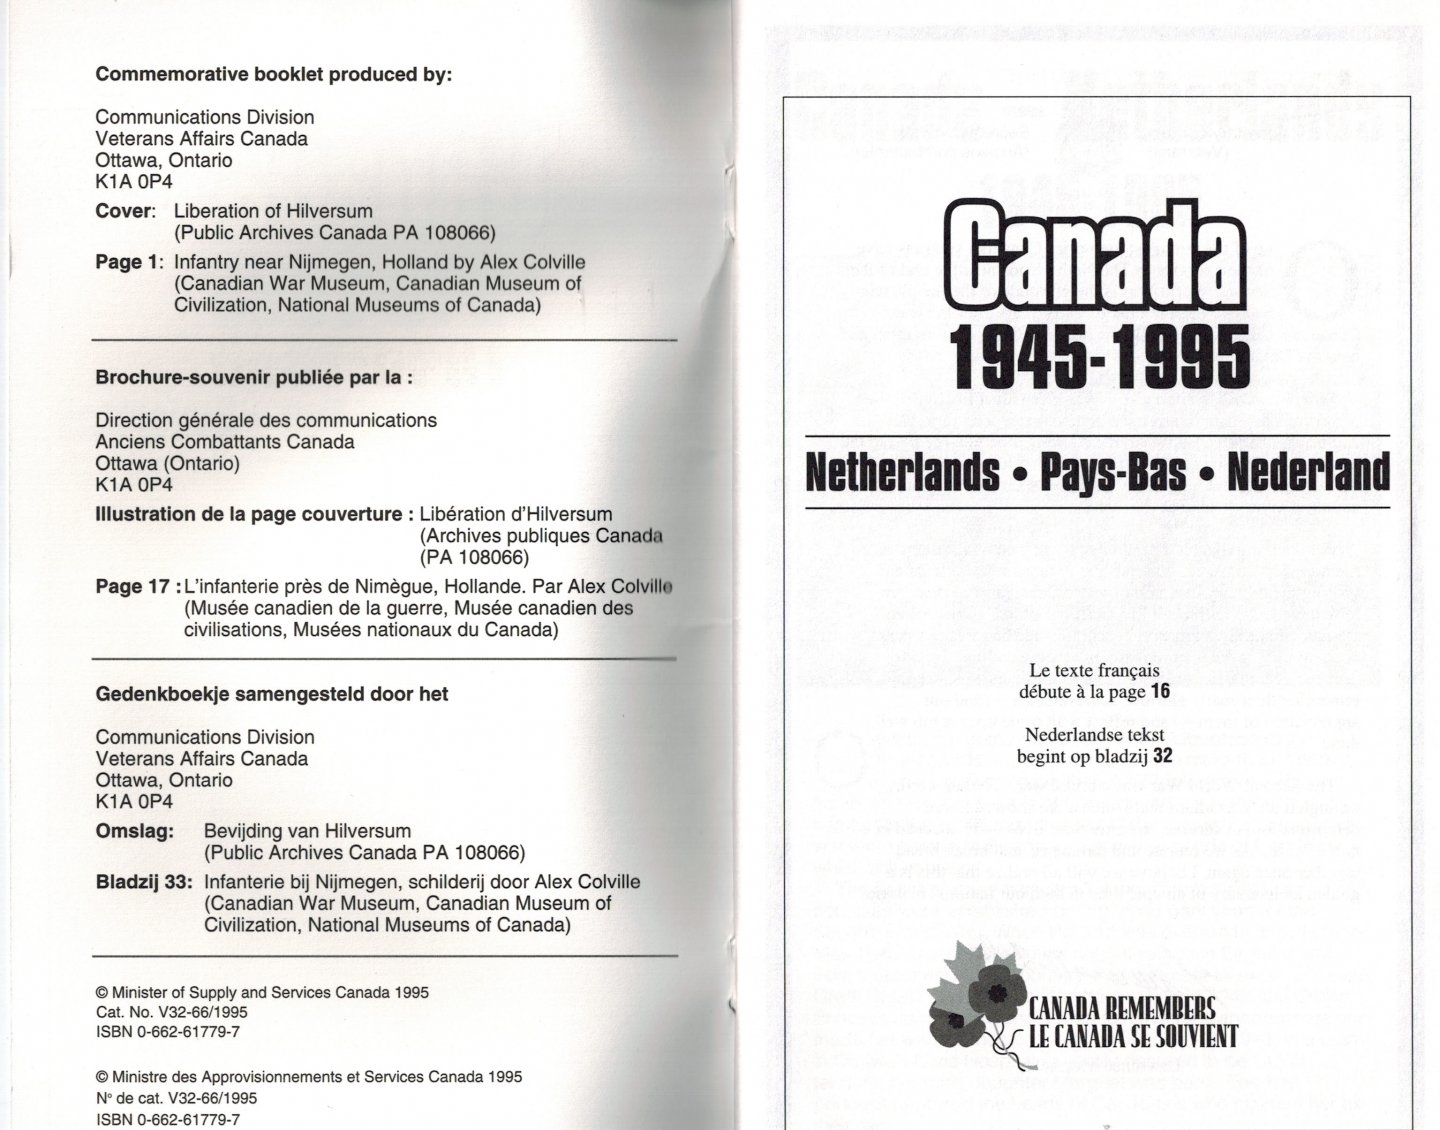 Ottawa (Ontario) - Canada 1945-1995.